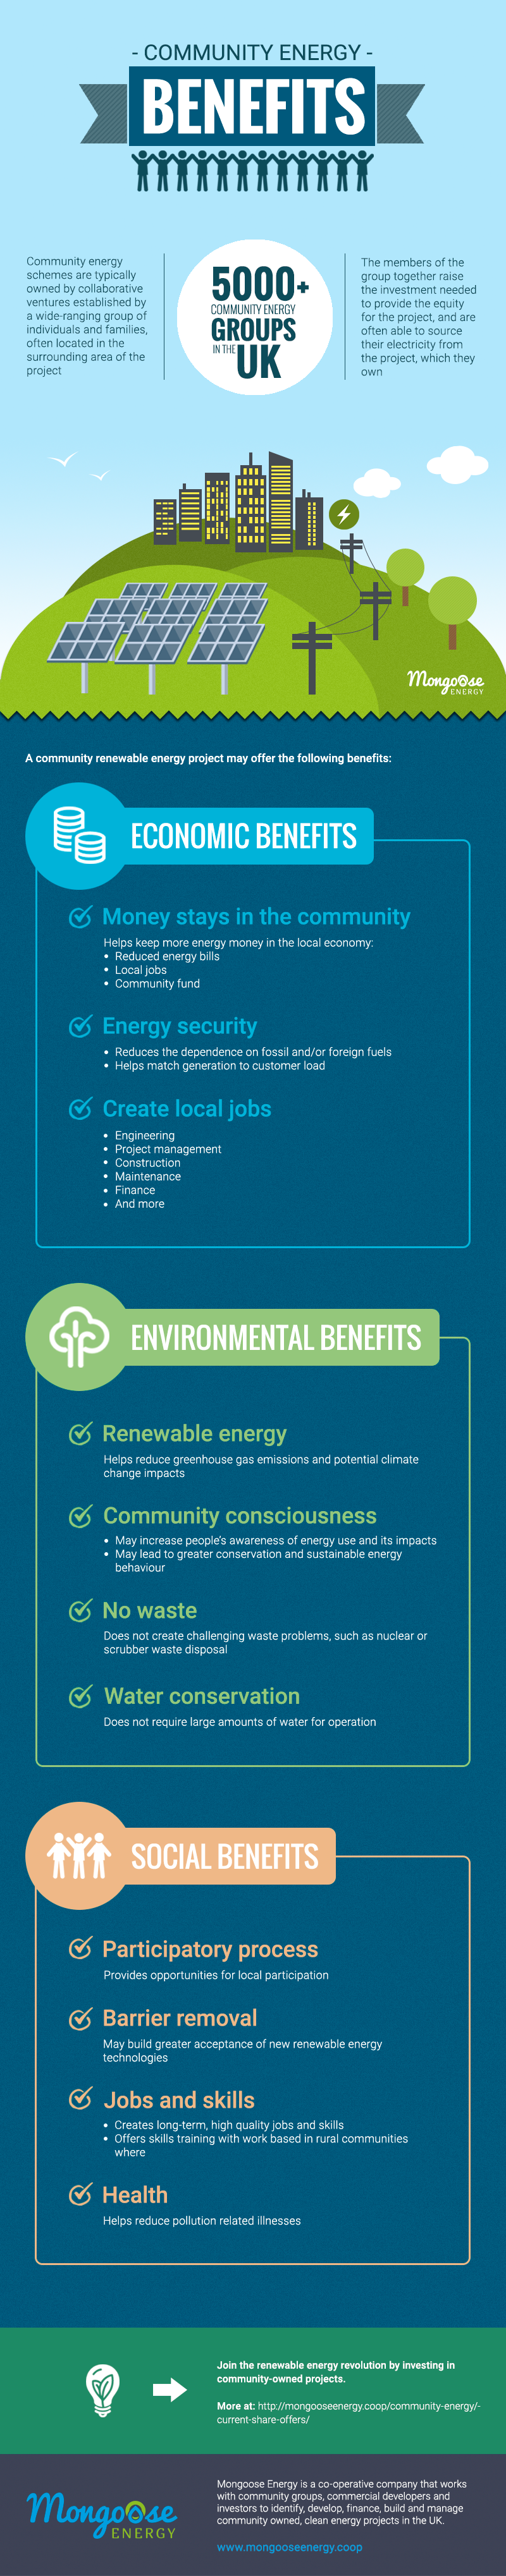 Diseño de infografía: "Community energy benefits" -1